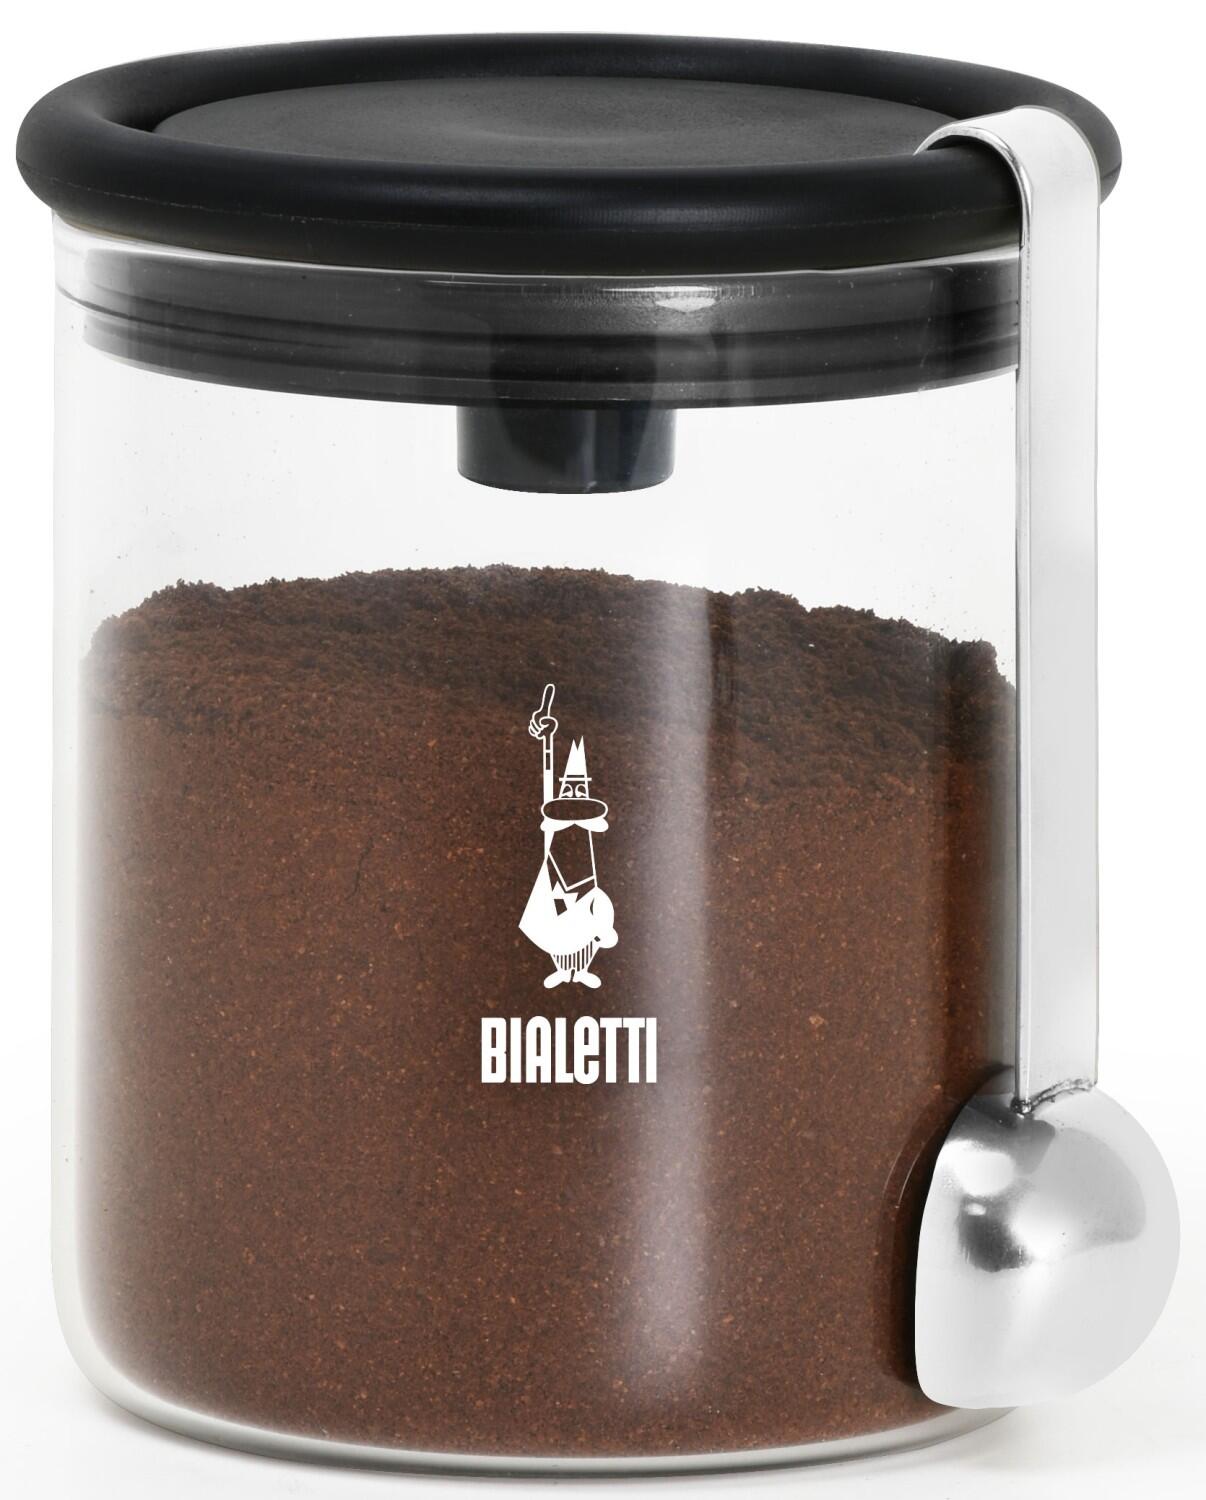 Баночка для кофе. Bialetti банка для кофе. Bialetti кофе Moka 250. Стеклянная банка для кофе Bialetti Moka. Емкость для хранения молотого кофе Bialetti barattolo.